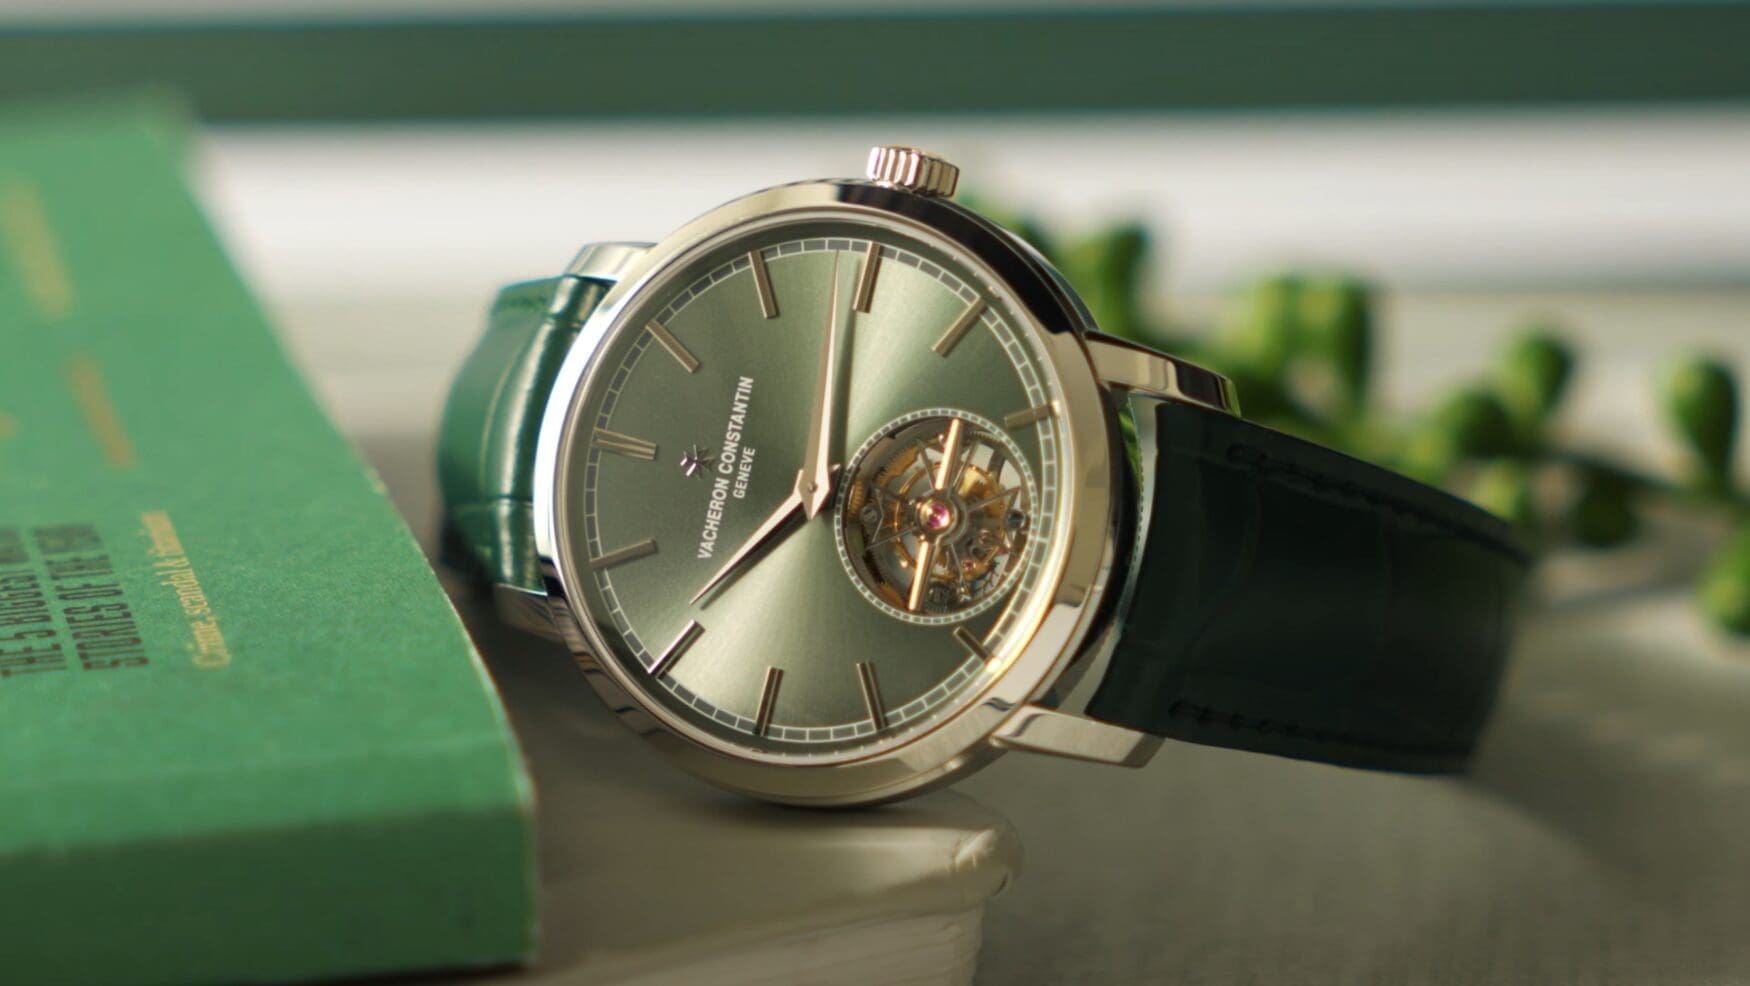 The Platonic ideal of a tourbillon watch: the Vacheron Constantin Traditionnelle Tourbillon in platinum